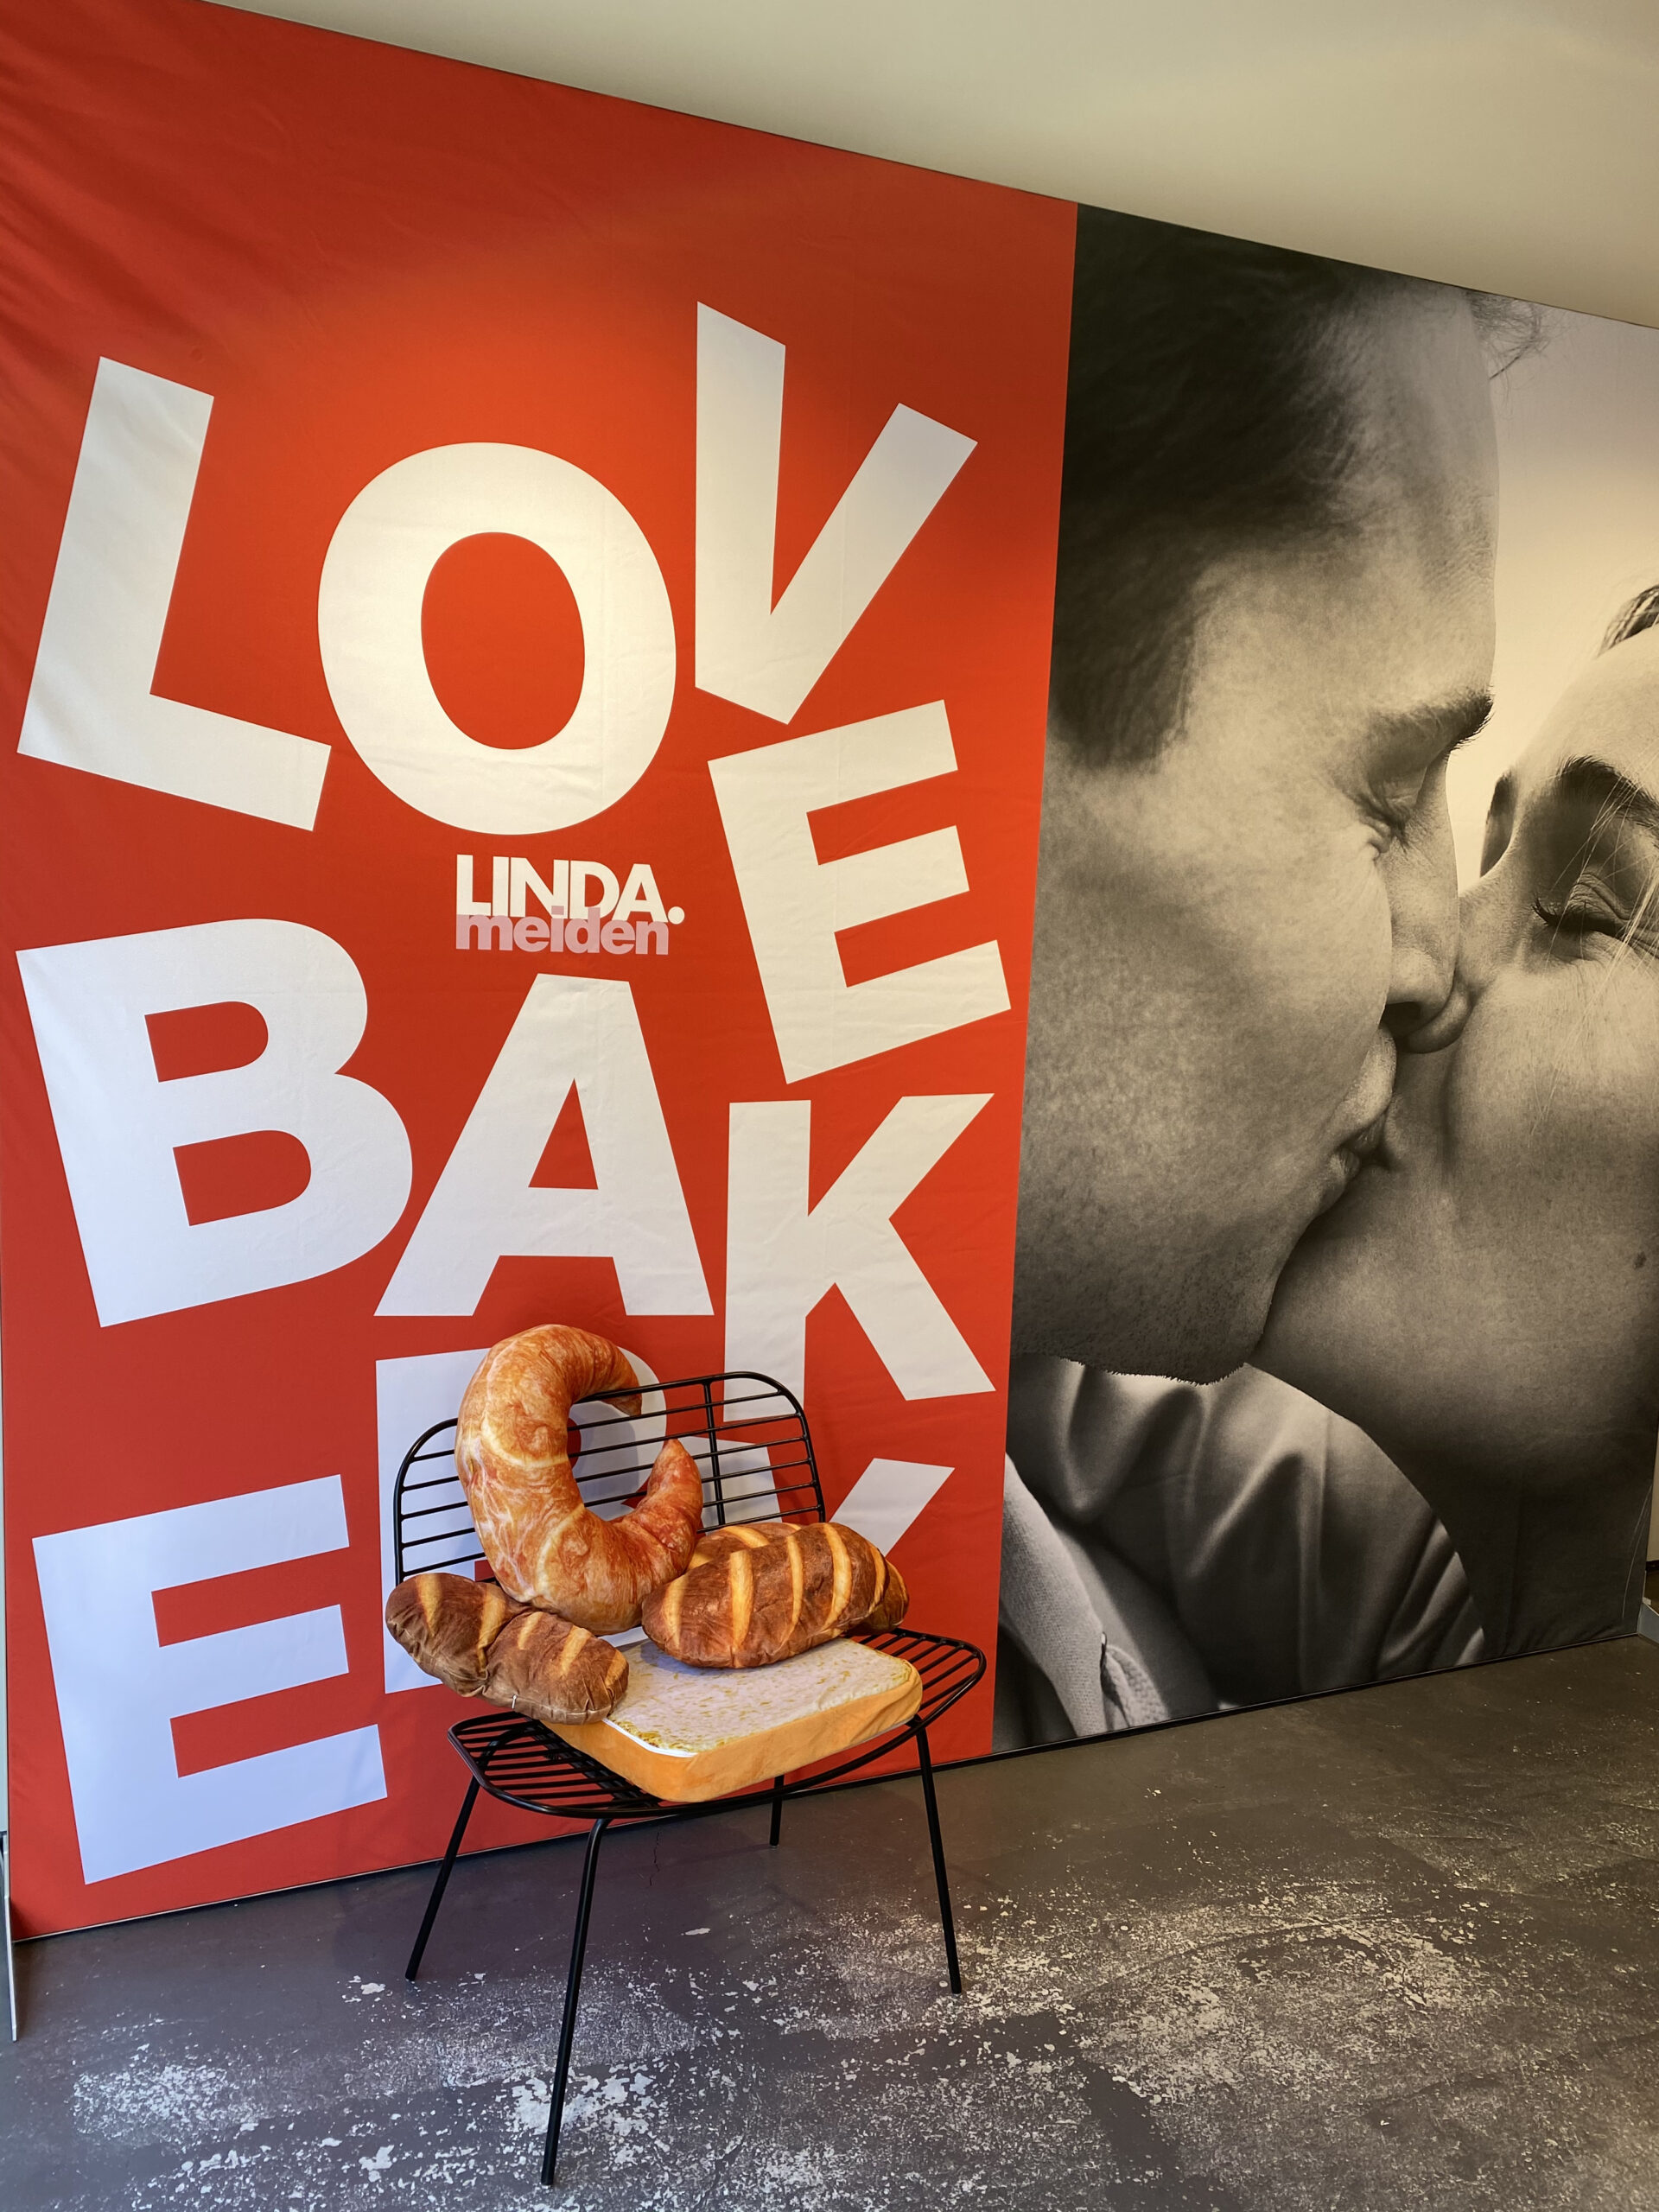 LINDA. LOVE BAKERY